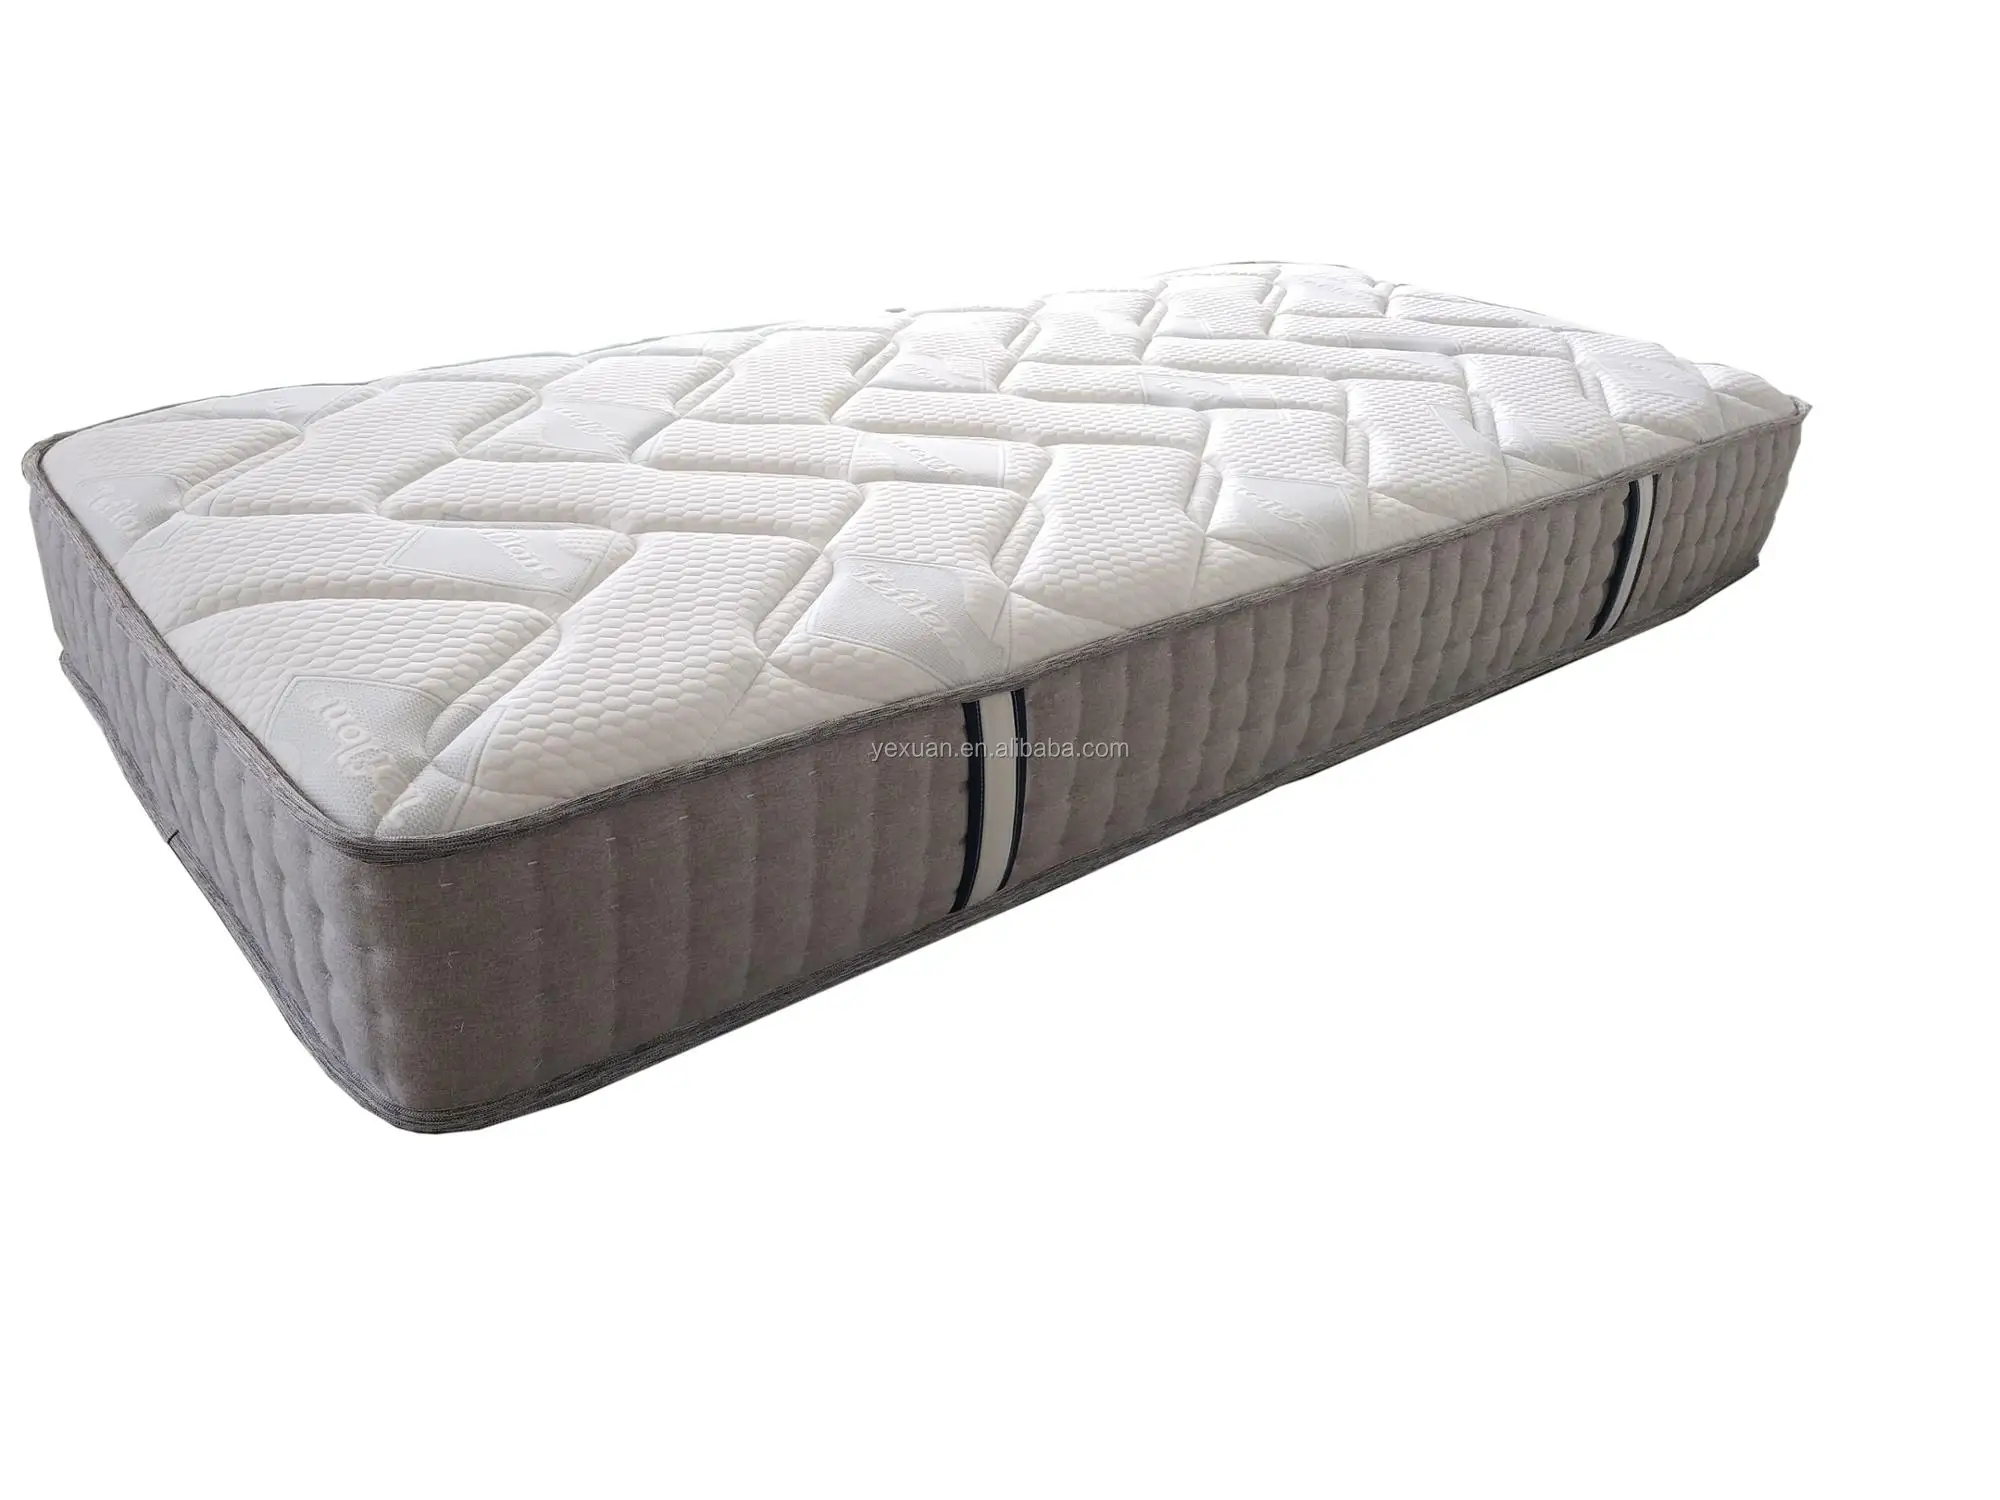 bed sponge mattress for sale